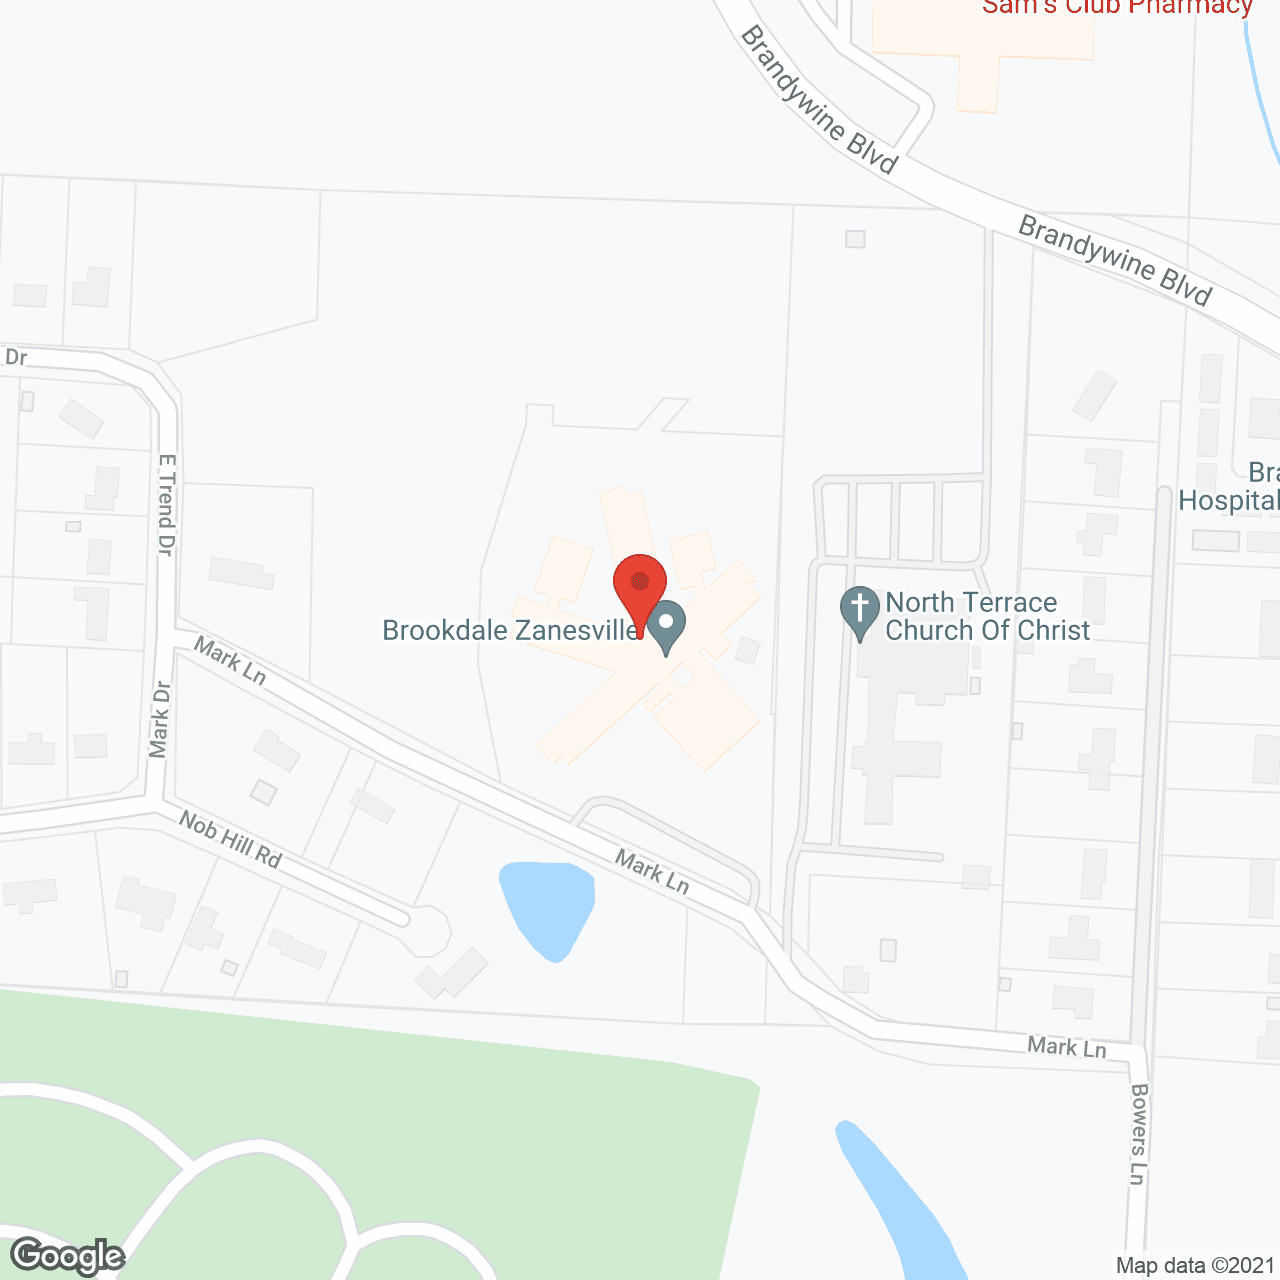 Brookdale Zanesville in google map